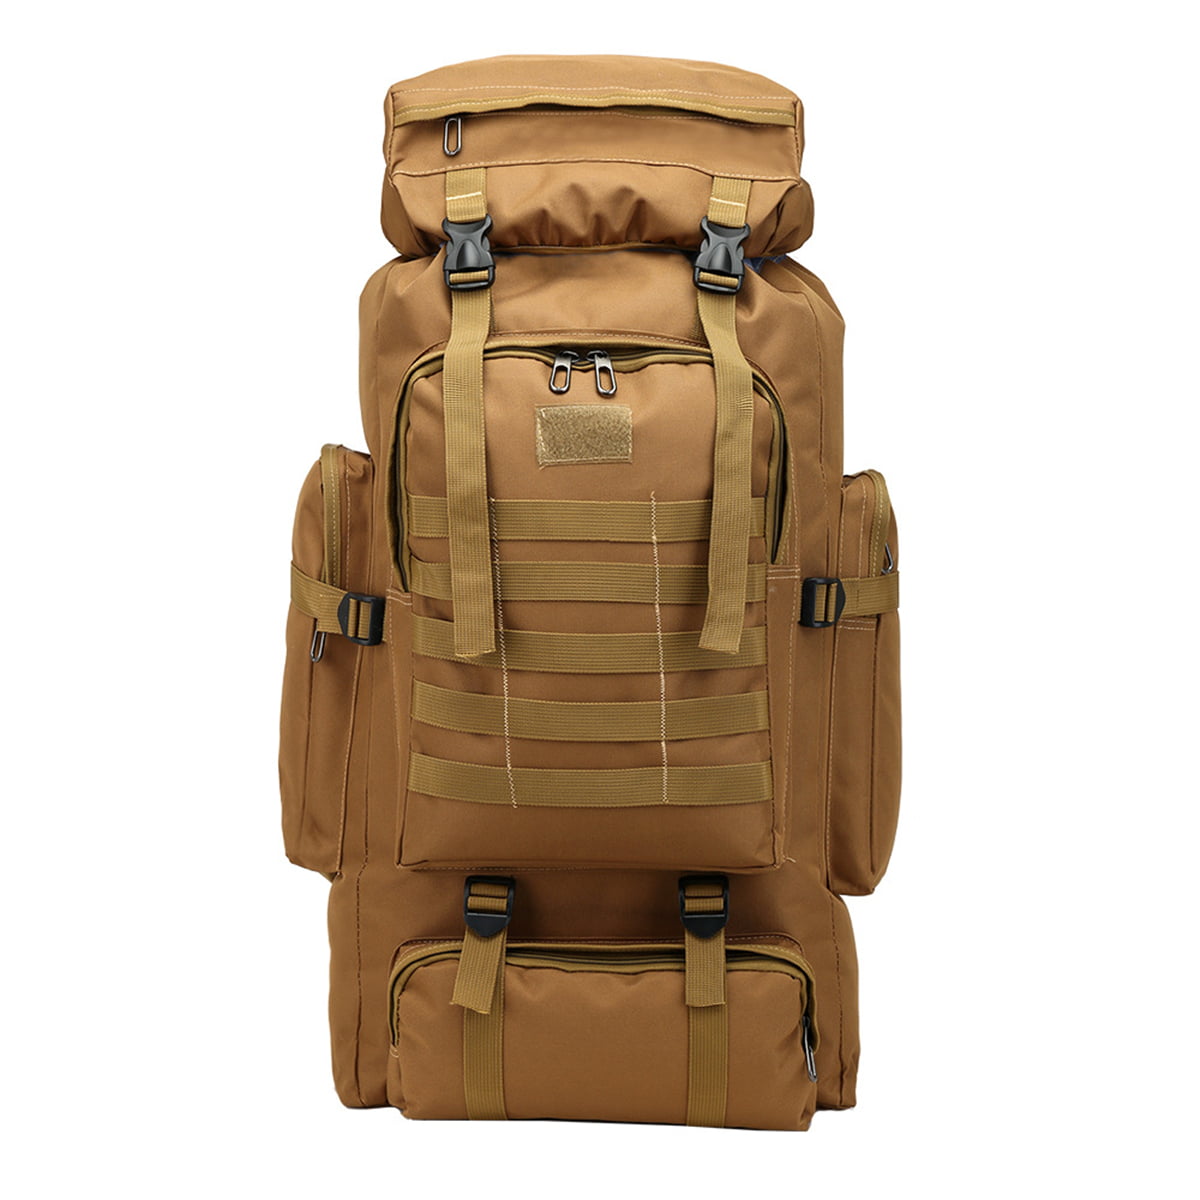 Outdoor Waterproof Military Tactical Molle Bag Camping Hiking Trekking Backpack 